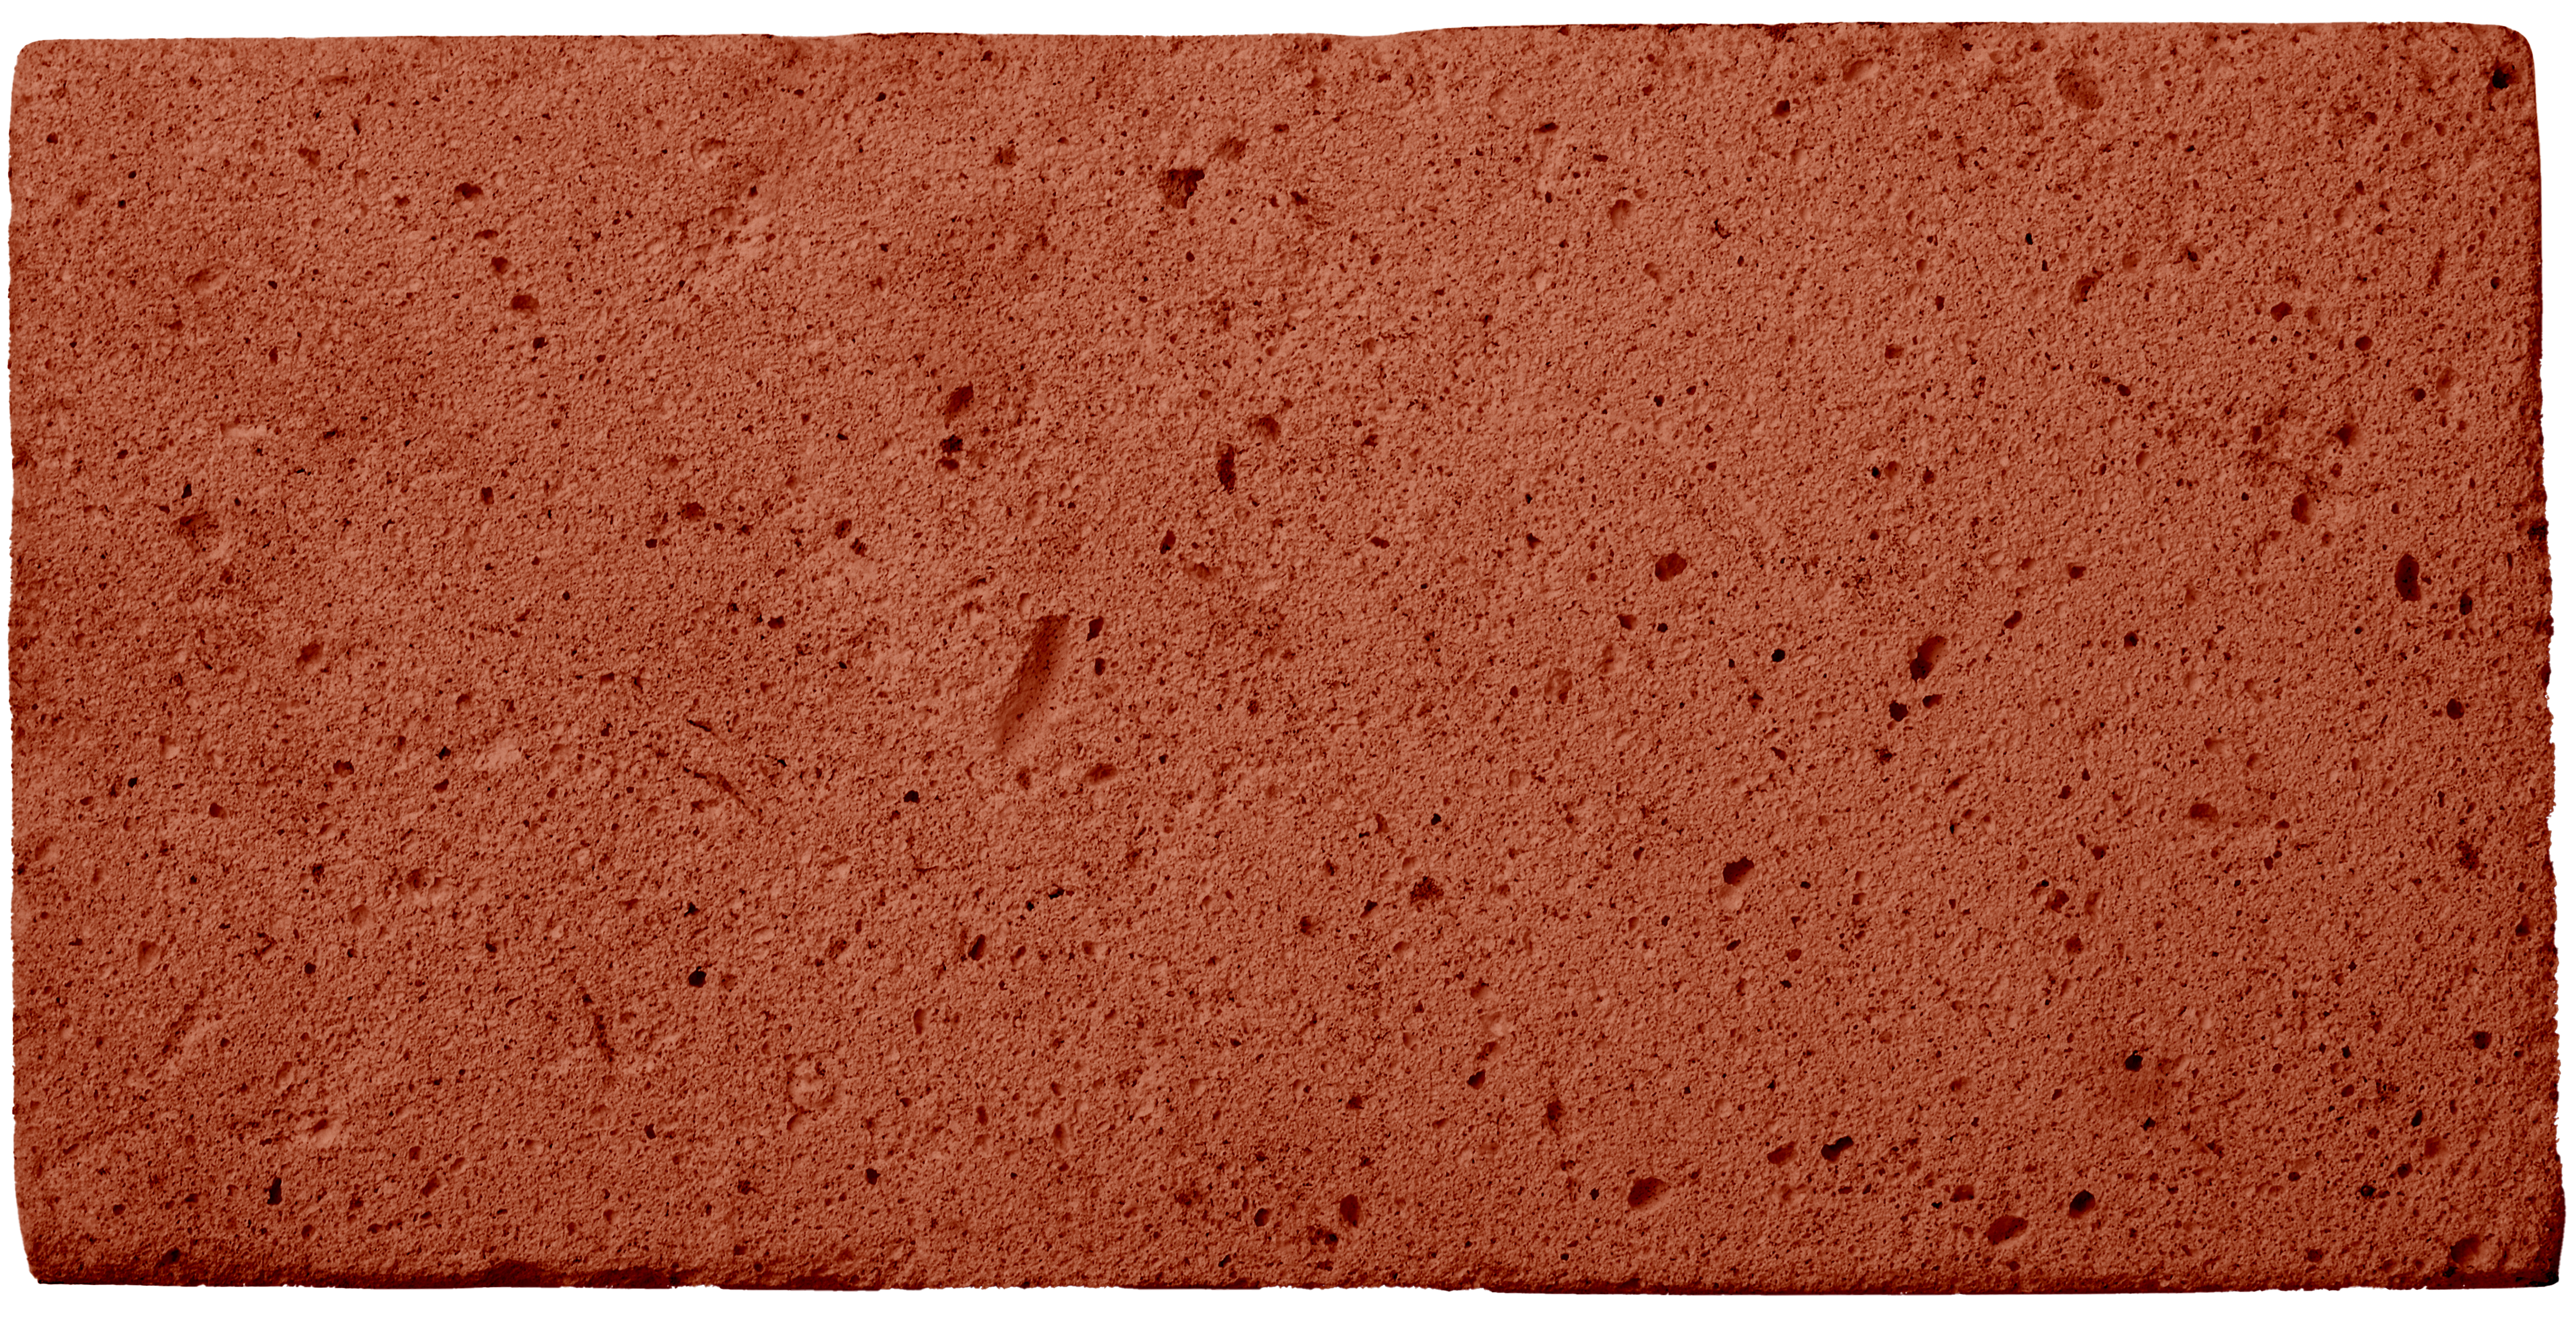 Image of a Brick